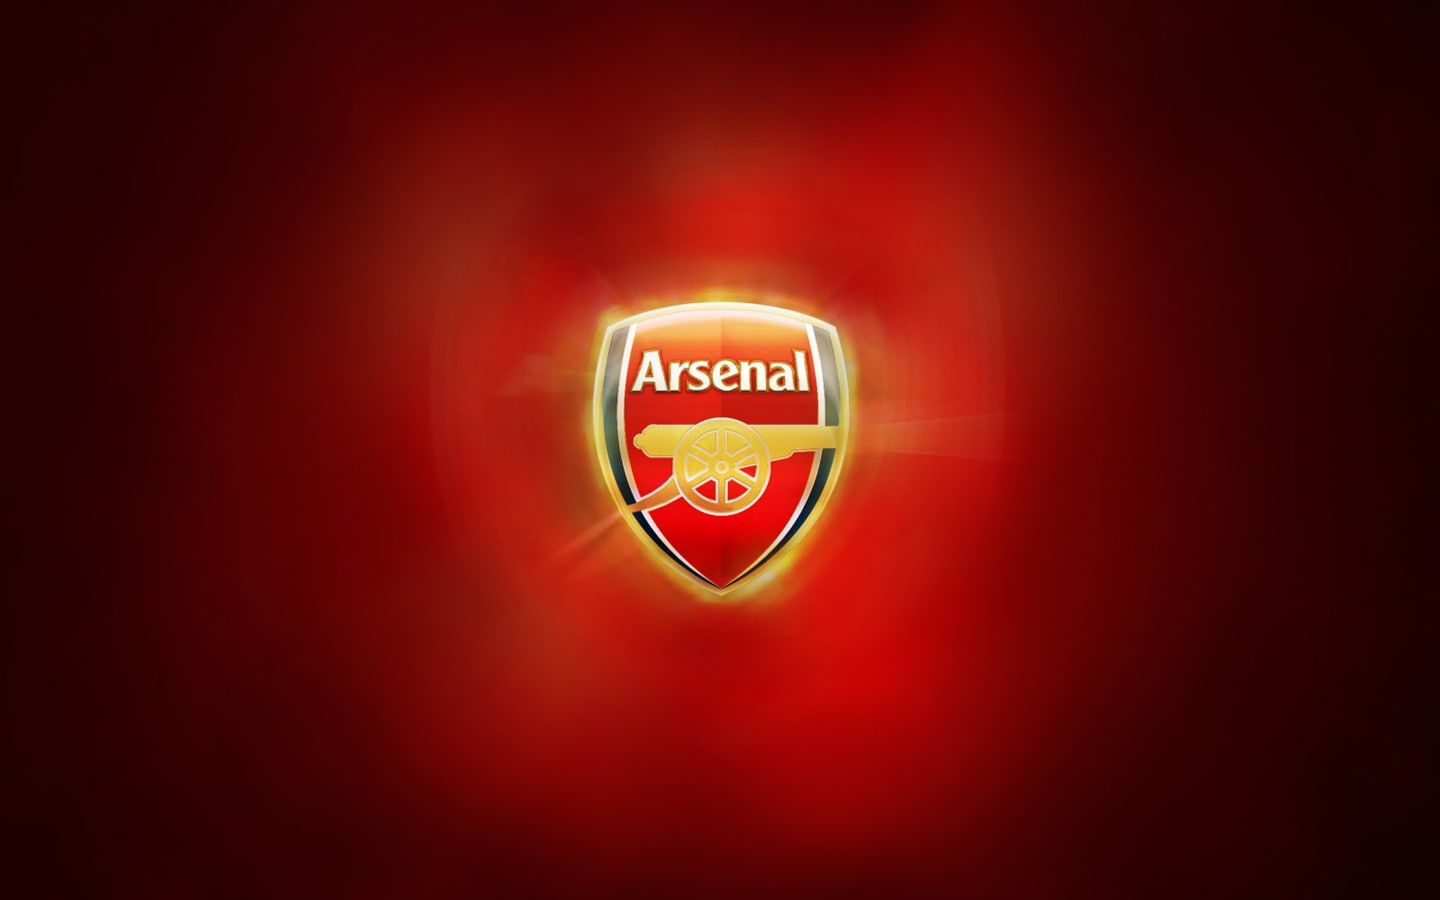 Arsenal Logo, brand and logo